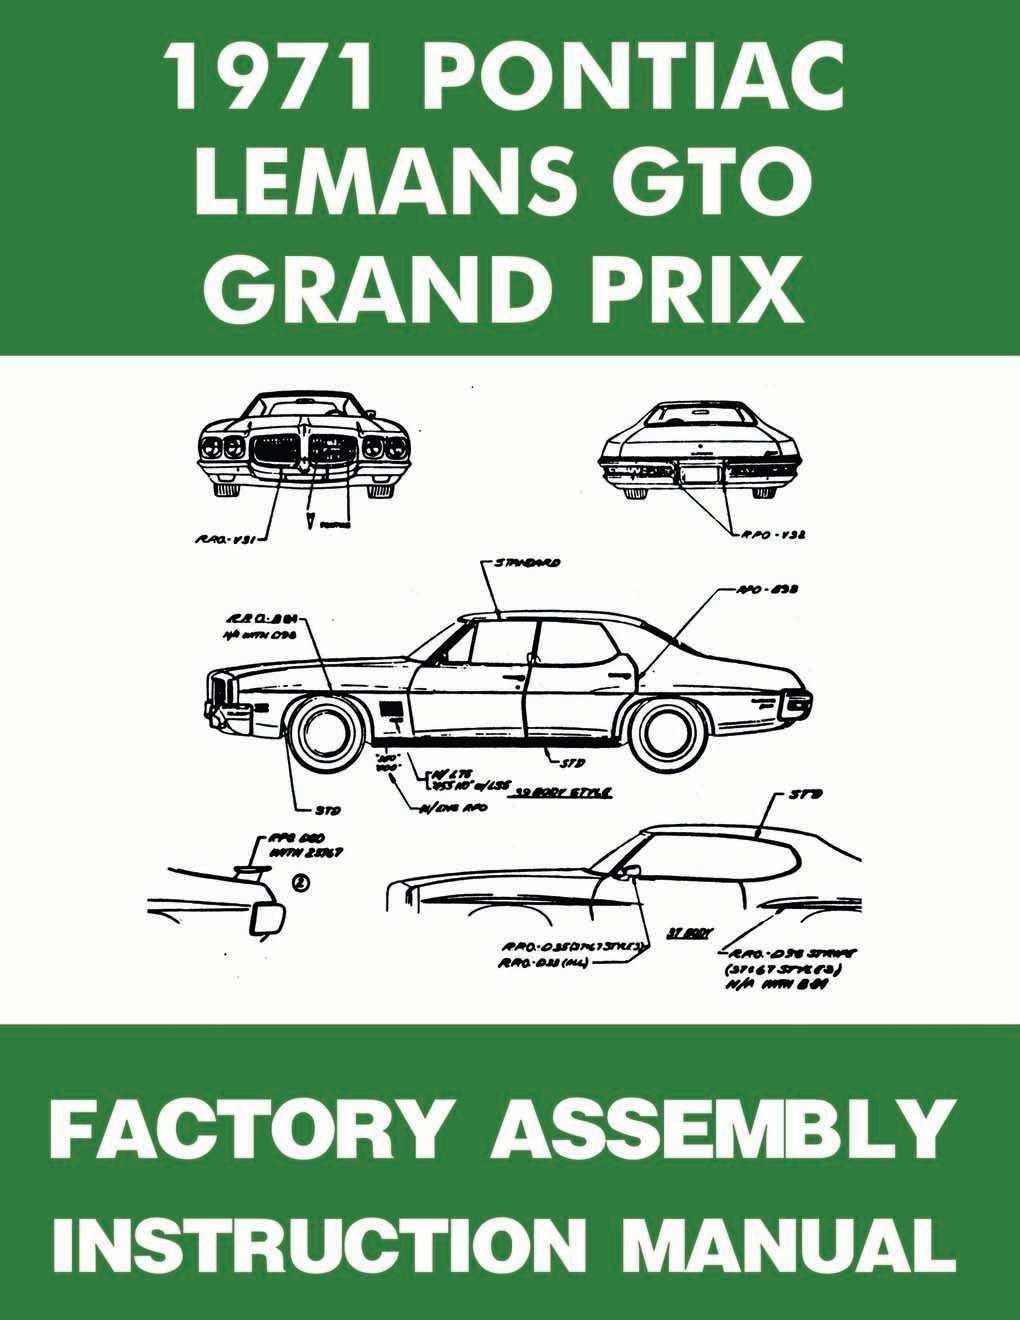 Factory Assembly Manual 1971 Pontiac GTO, Lemans & Tempest